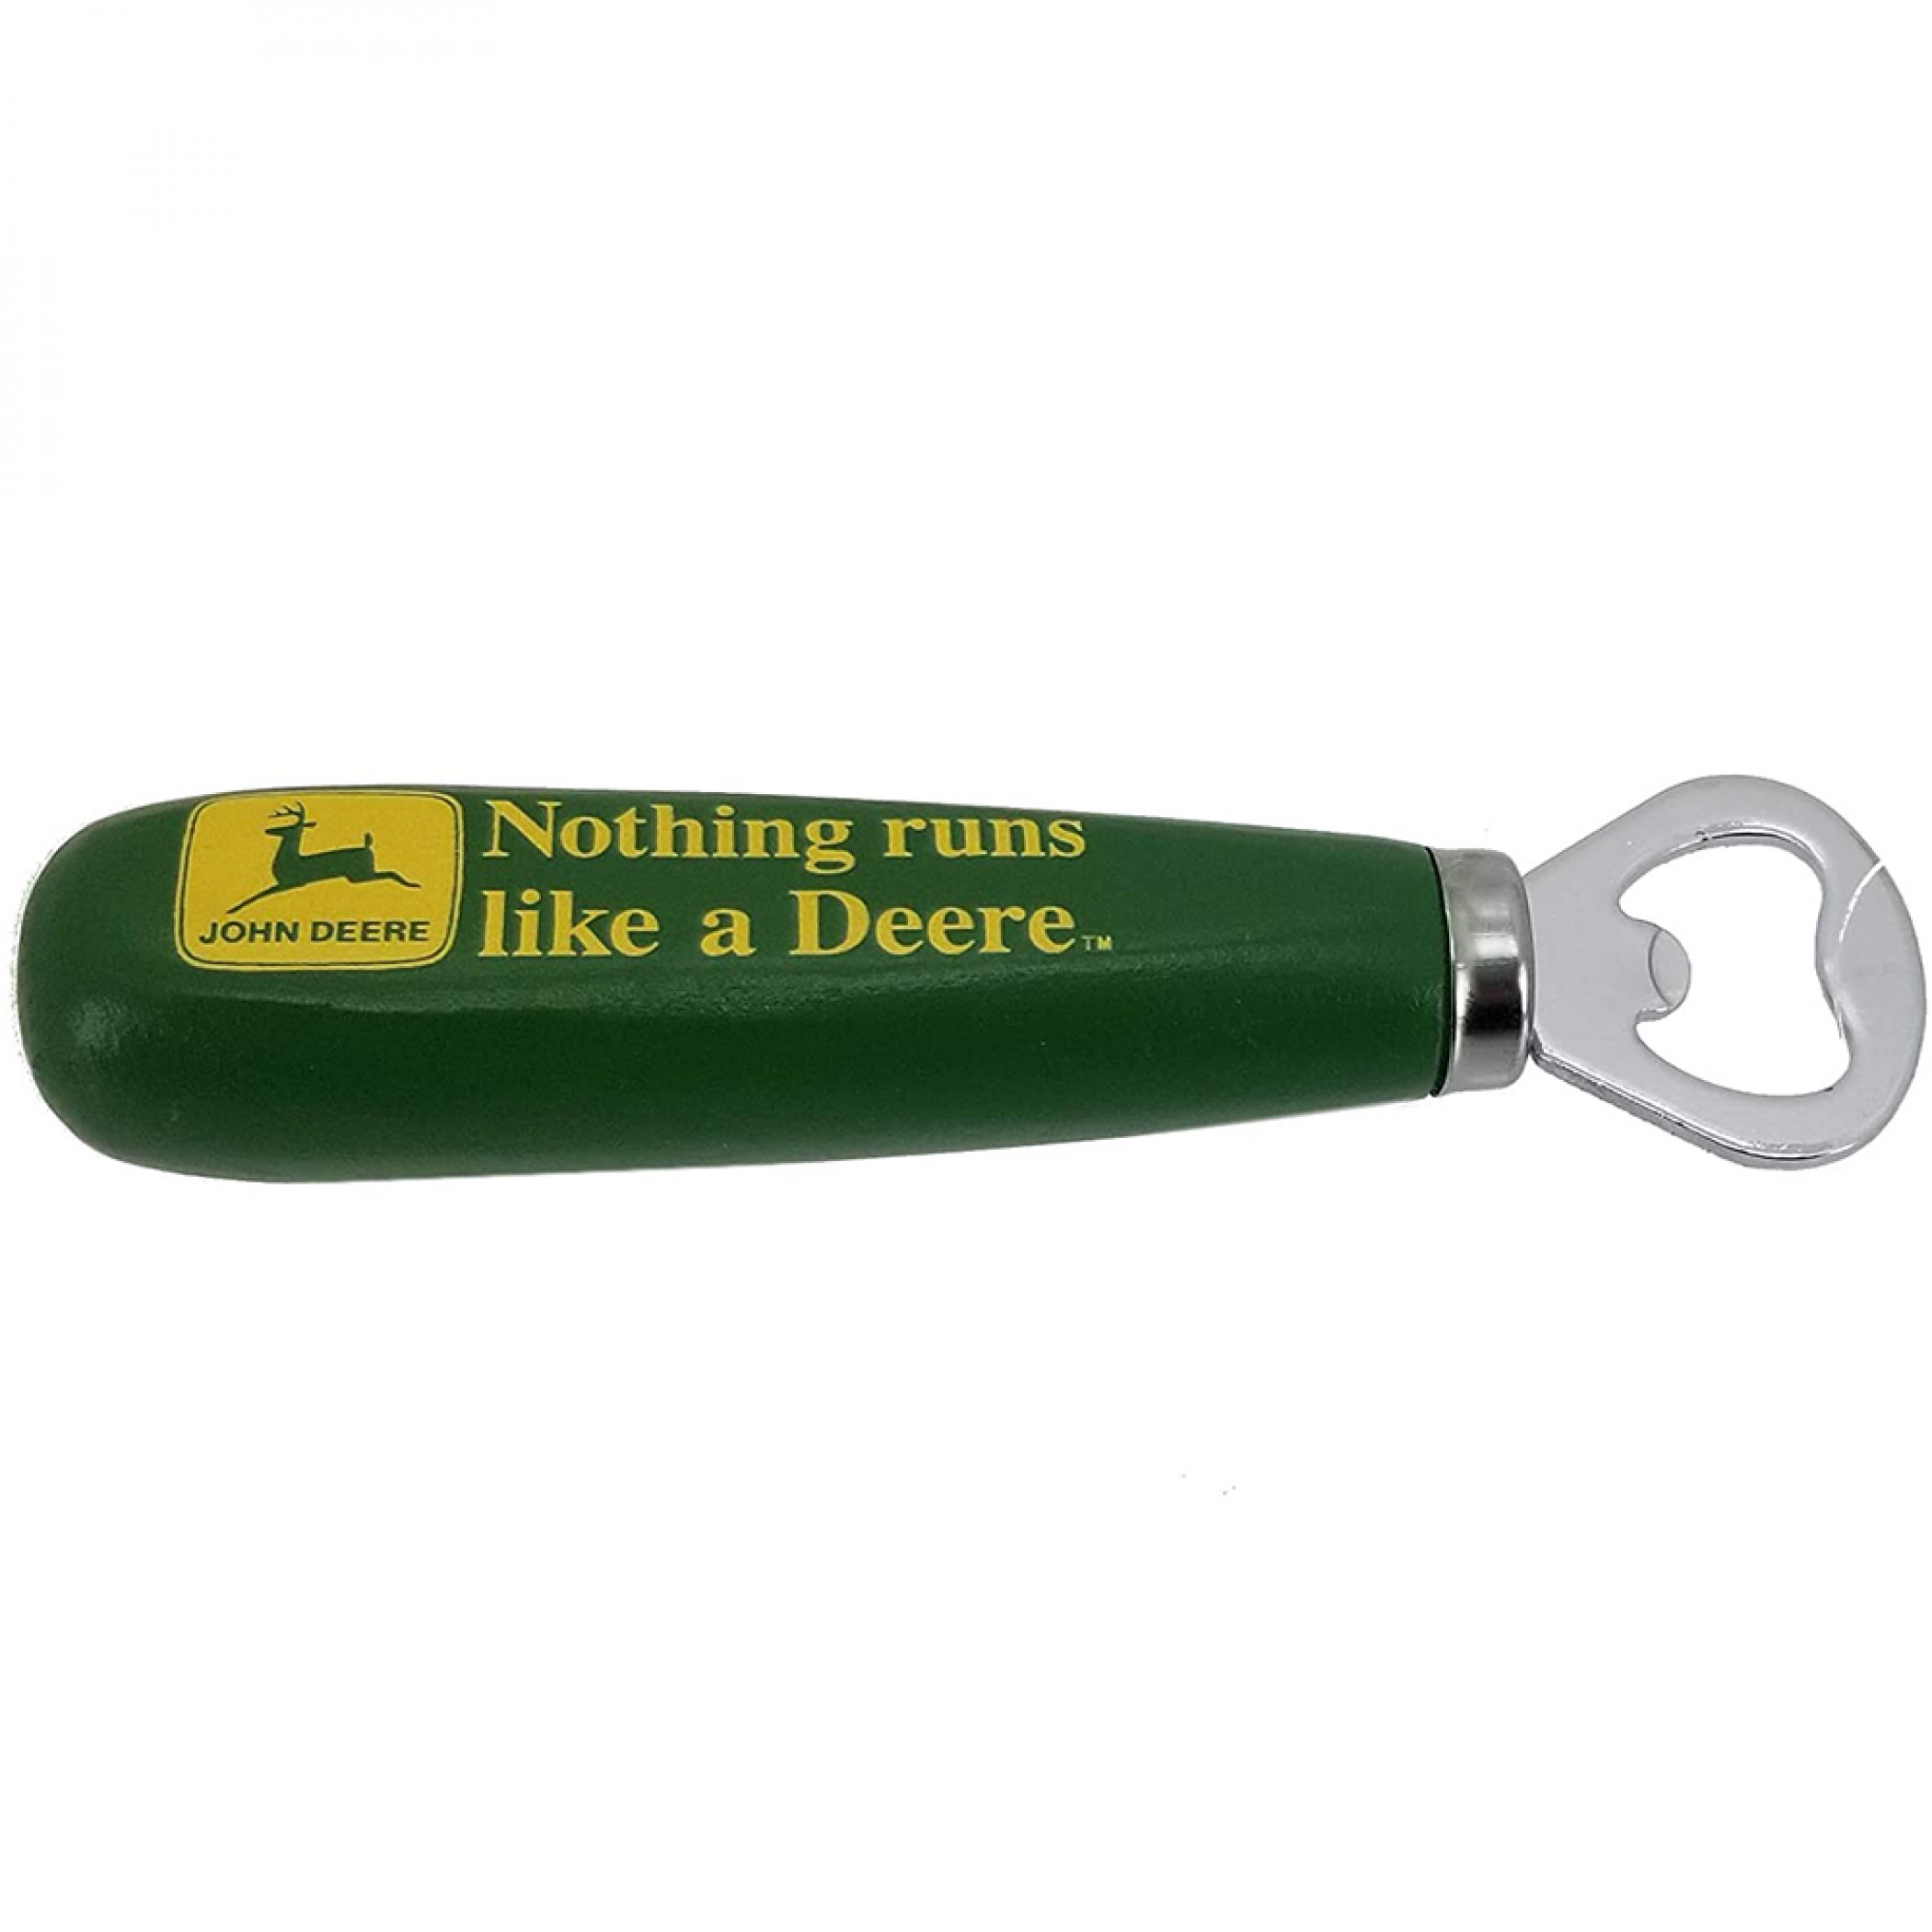 John Deere Nothing Runs Like A Deere Wooden Handle Bottle Opener